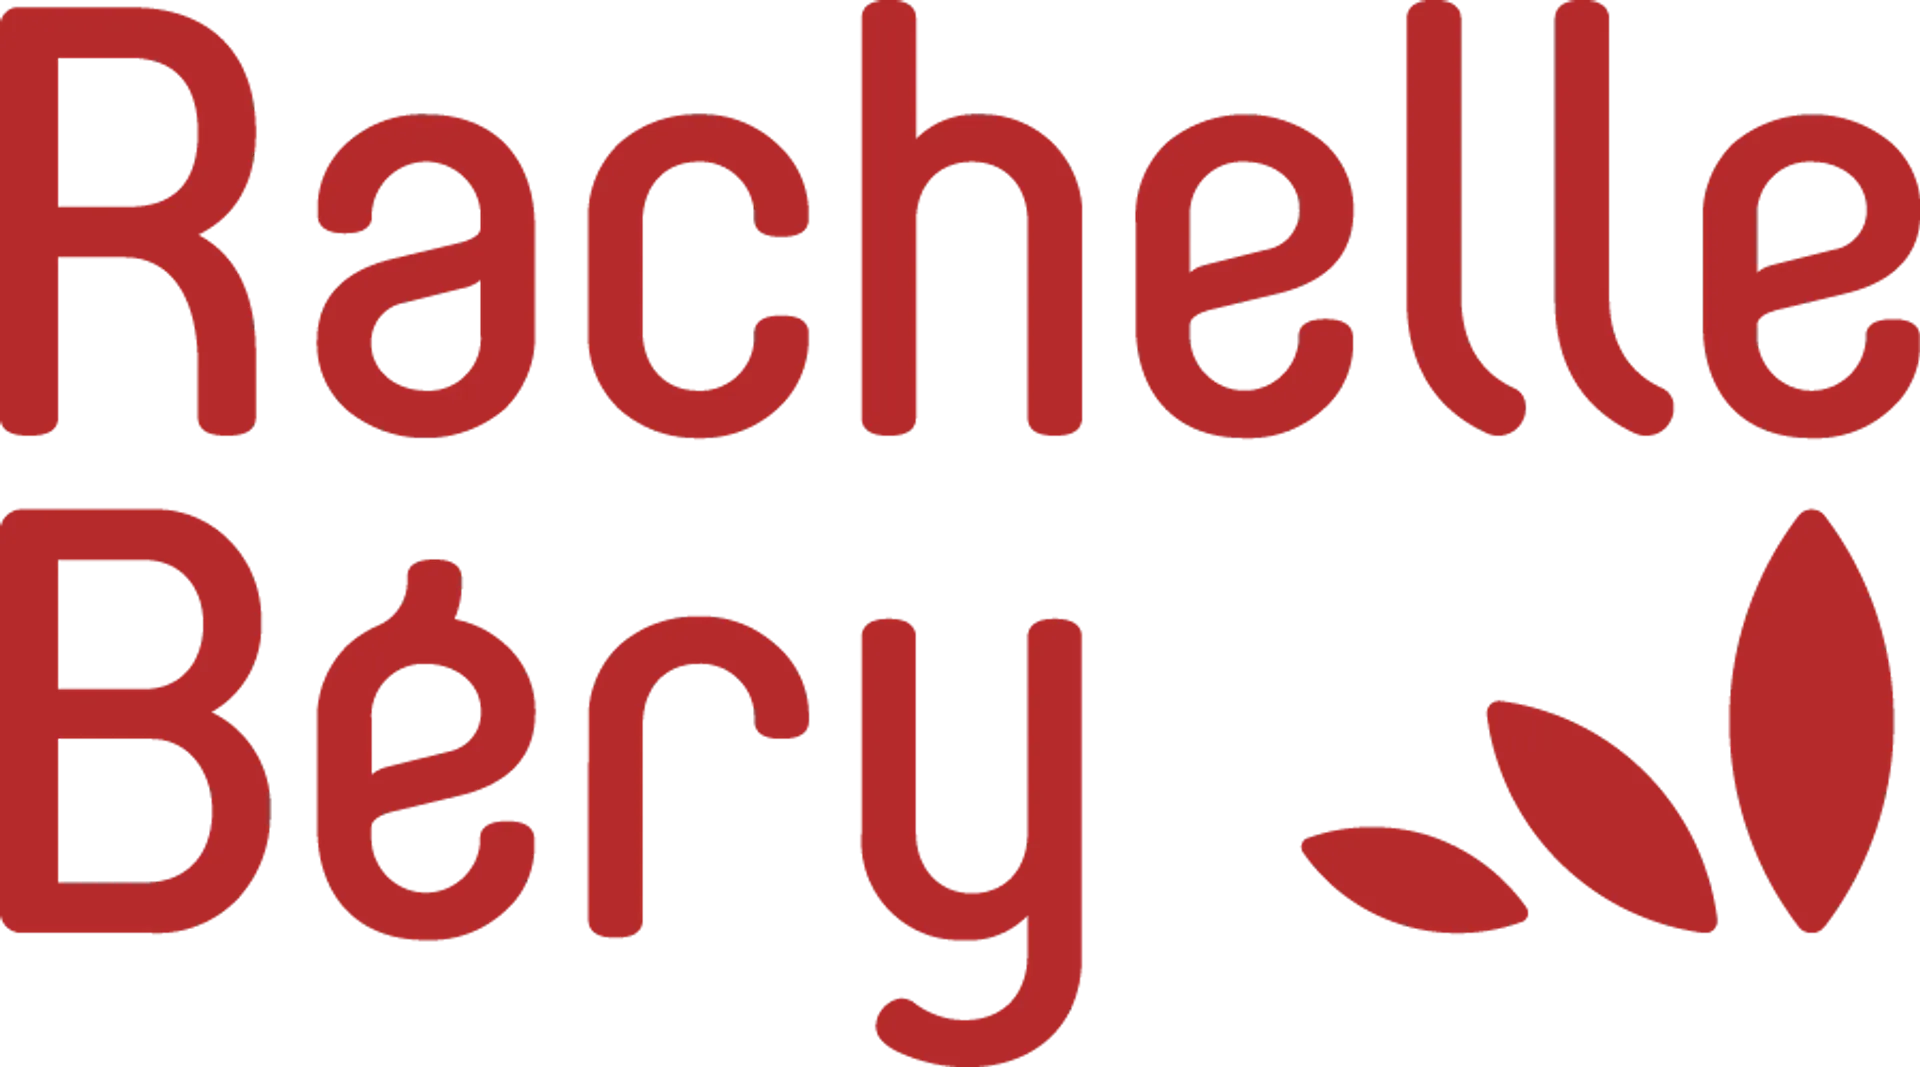 RACHELLE-BERNY PHARMACY logo